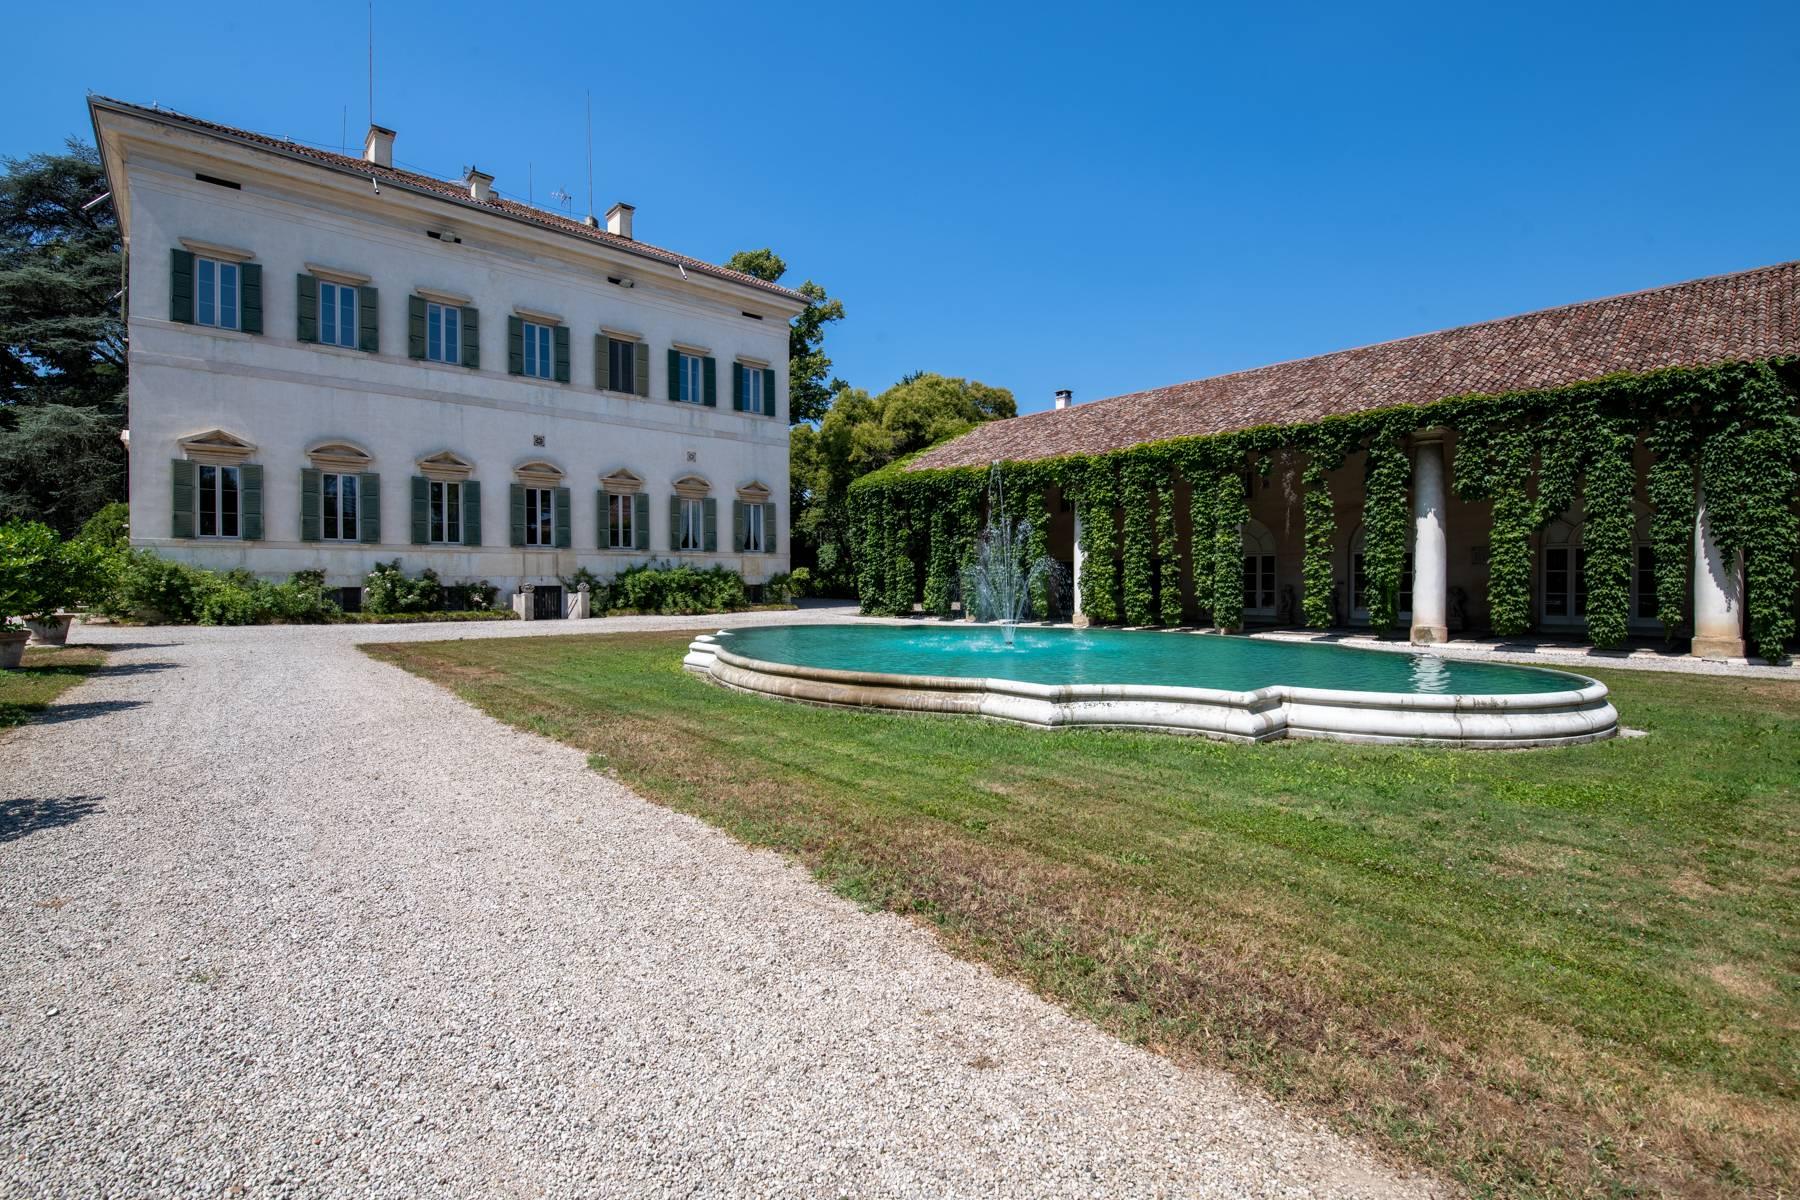 Elegante Villa Veneta con parco romantico e adiacenze - 4